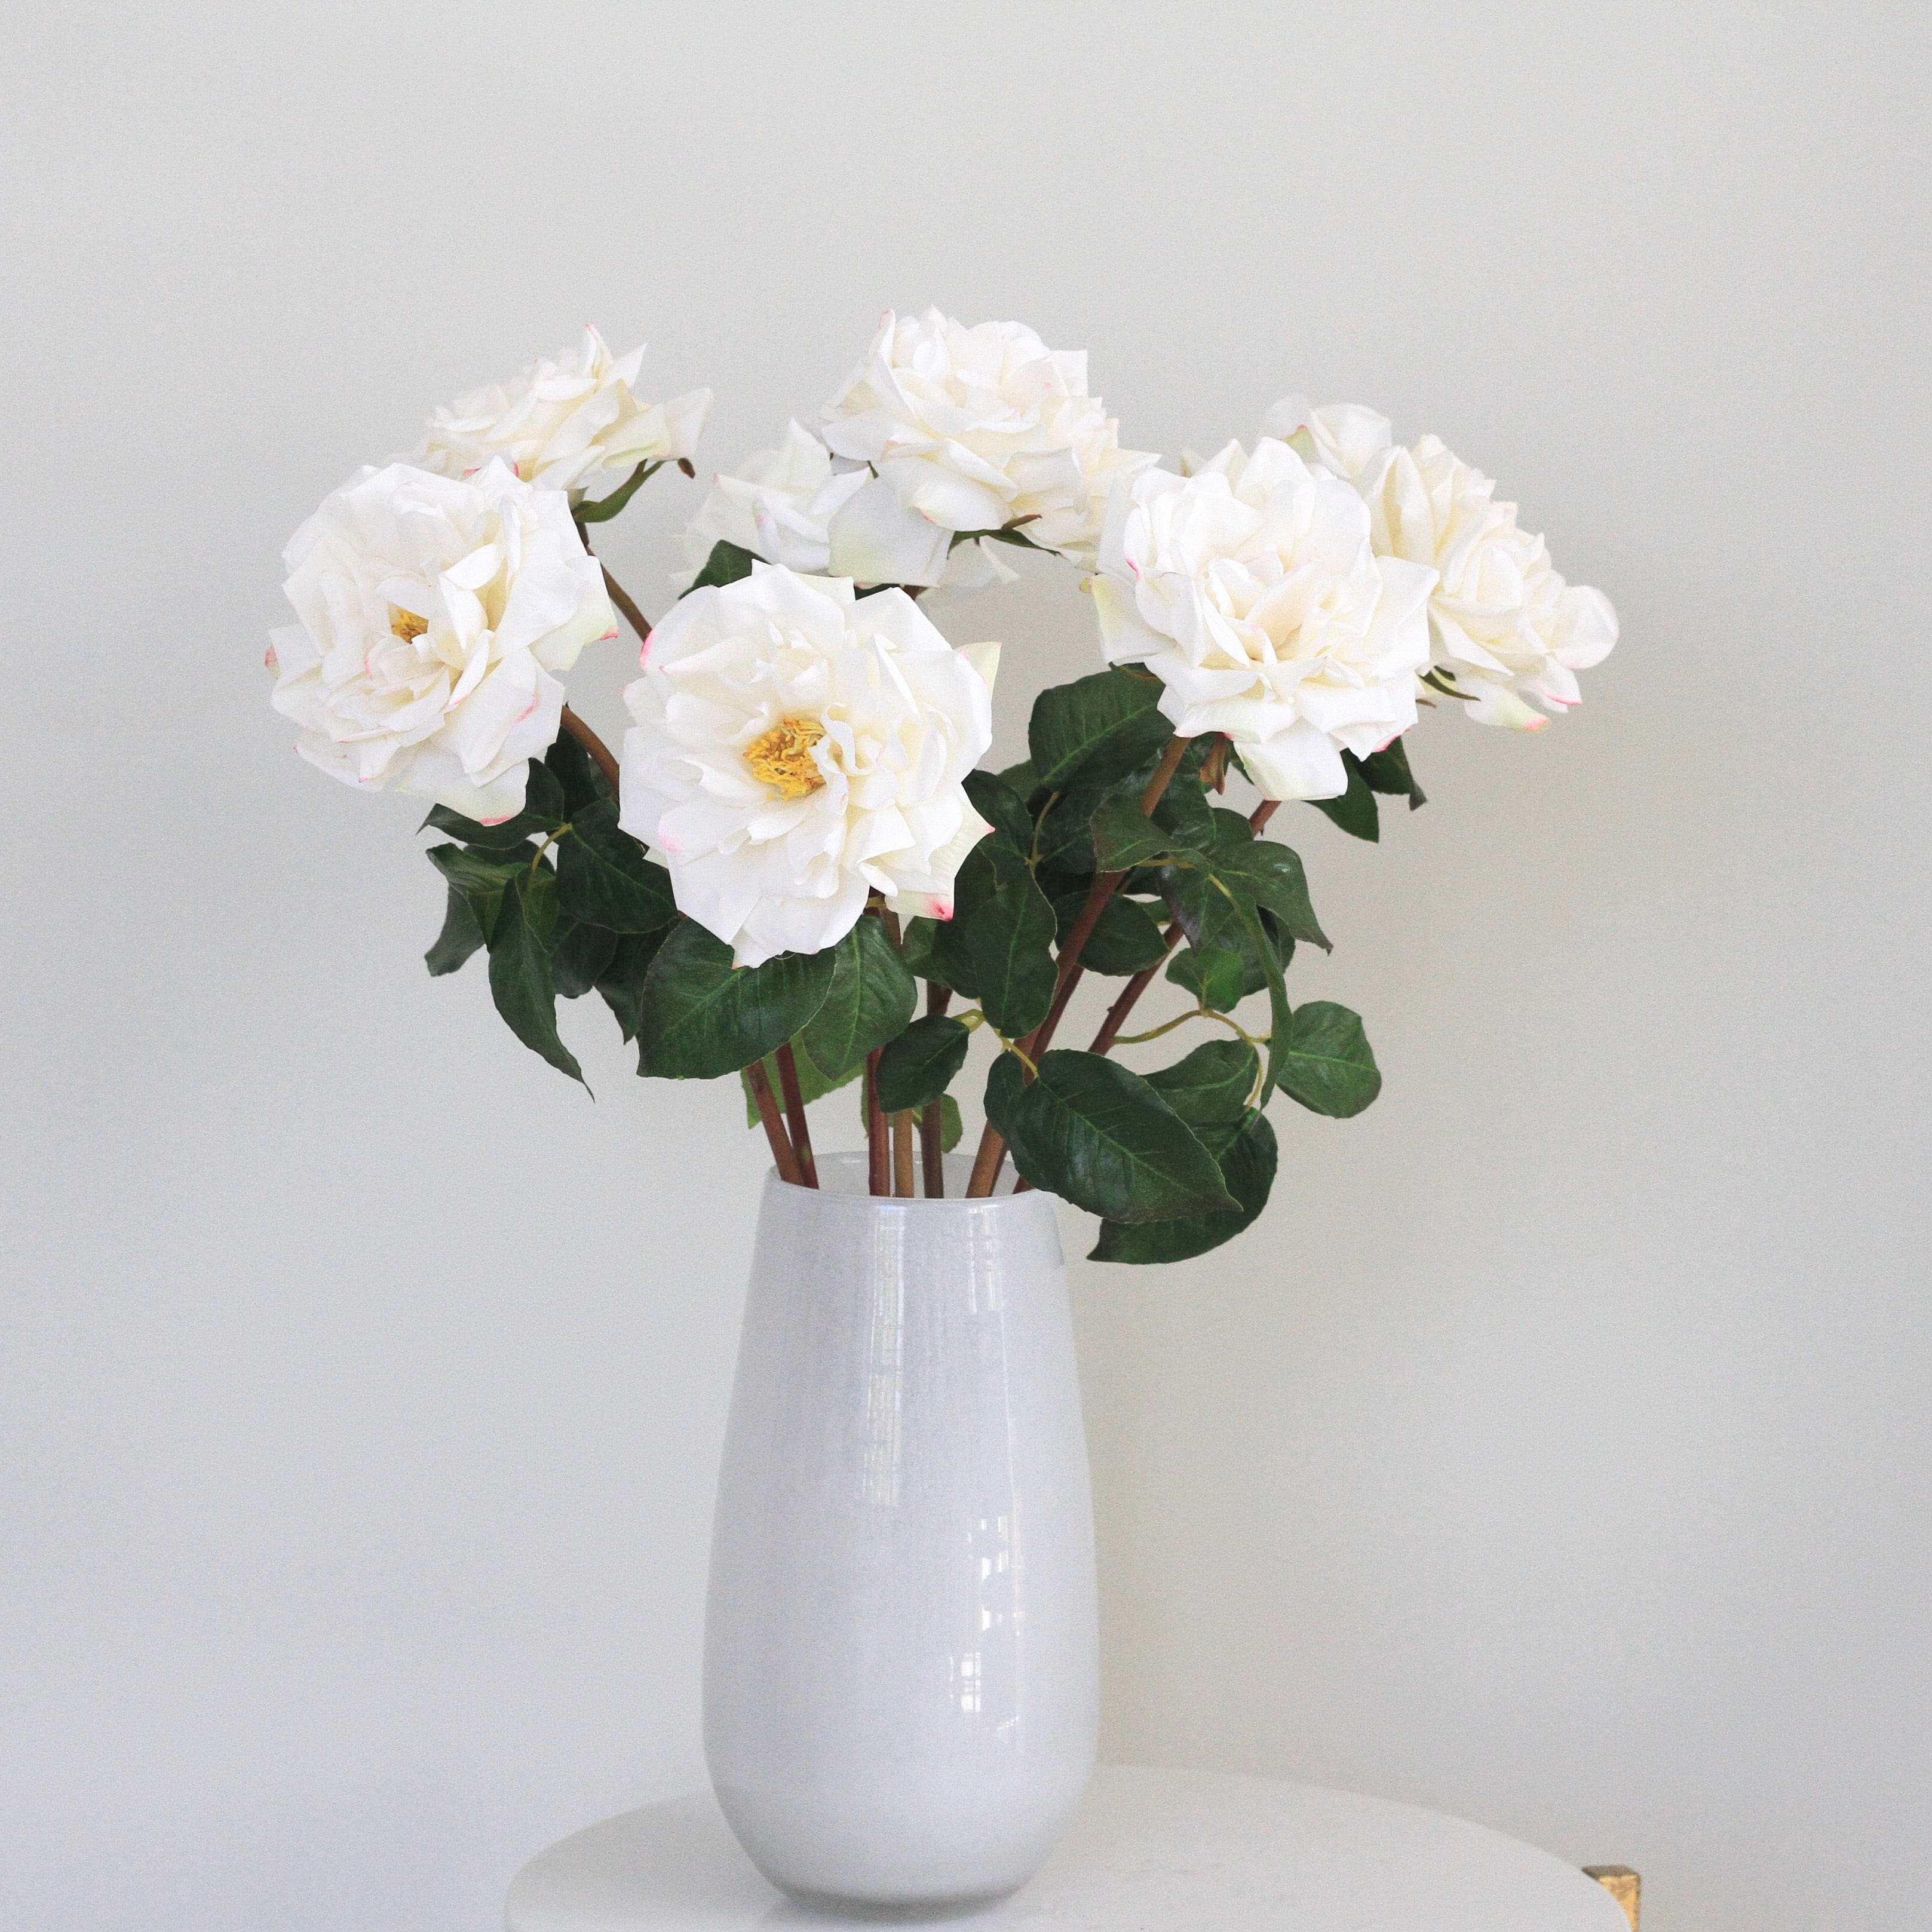 artificial flowers luxury faux silk white garden rose plant lifelike realistic faux flowers buy online from Amaranthine Blooms UK